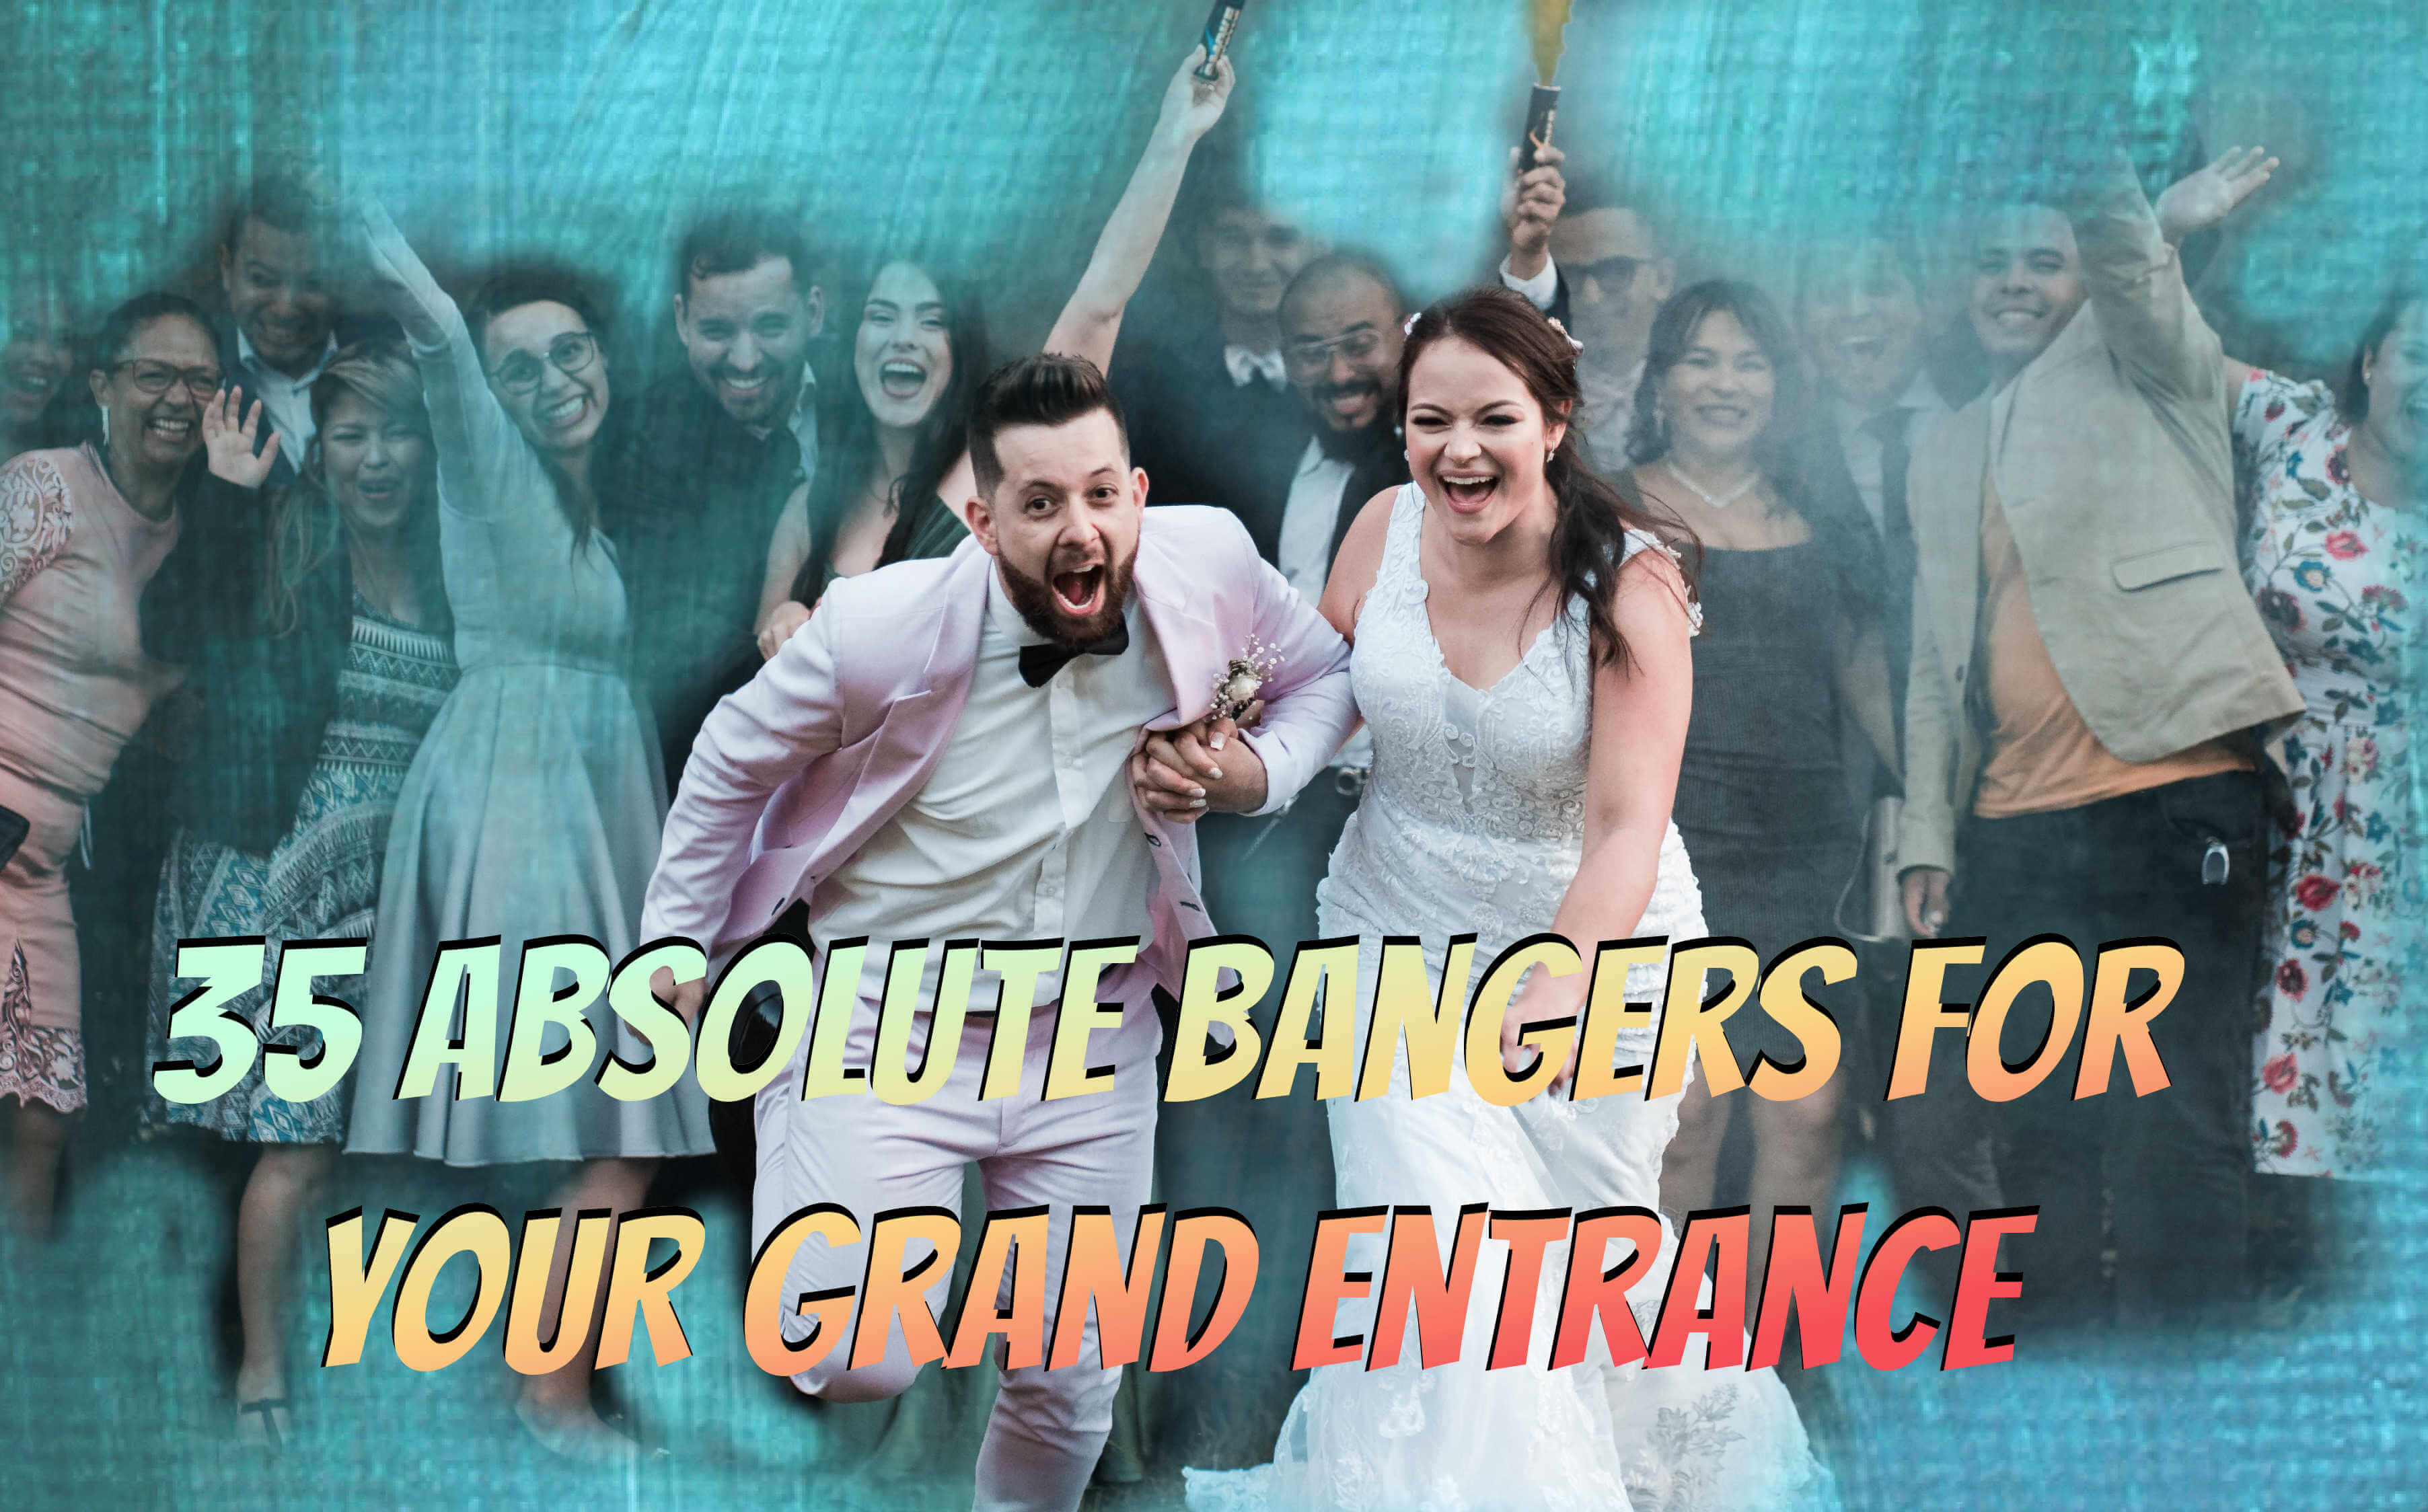 35 Bangers For Your Grand Entrance.jpg